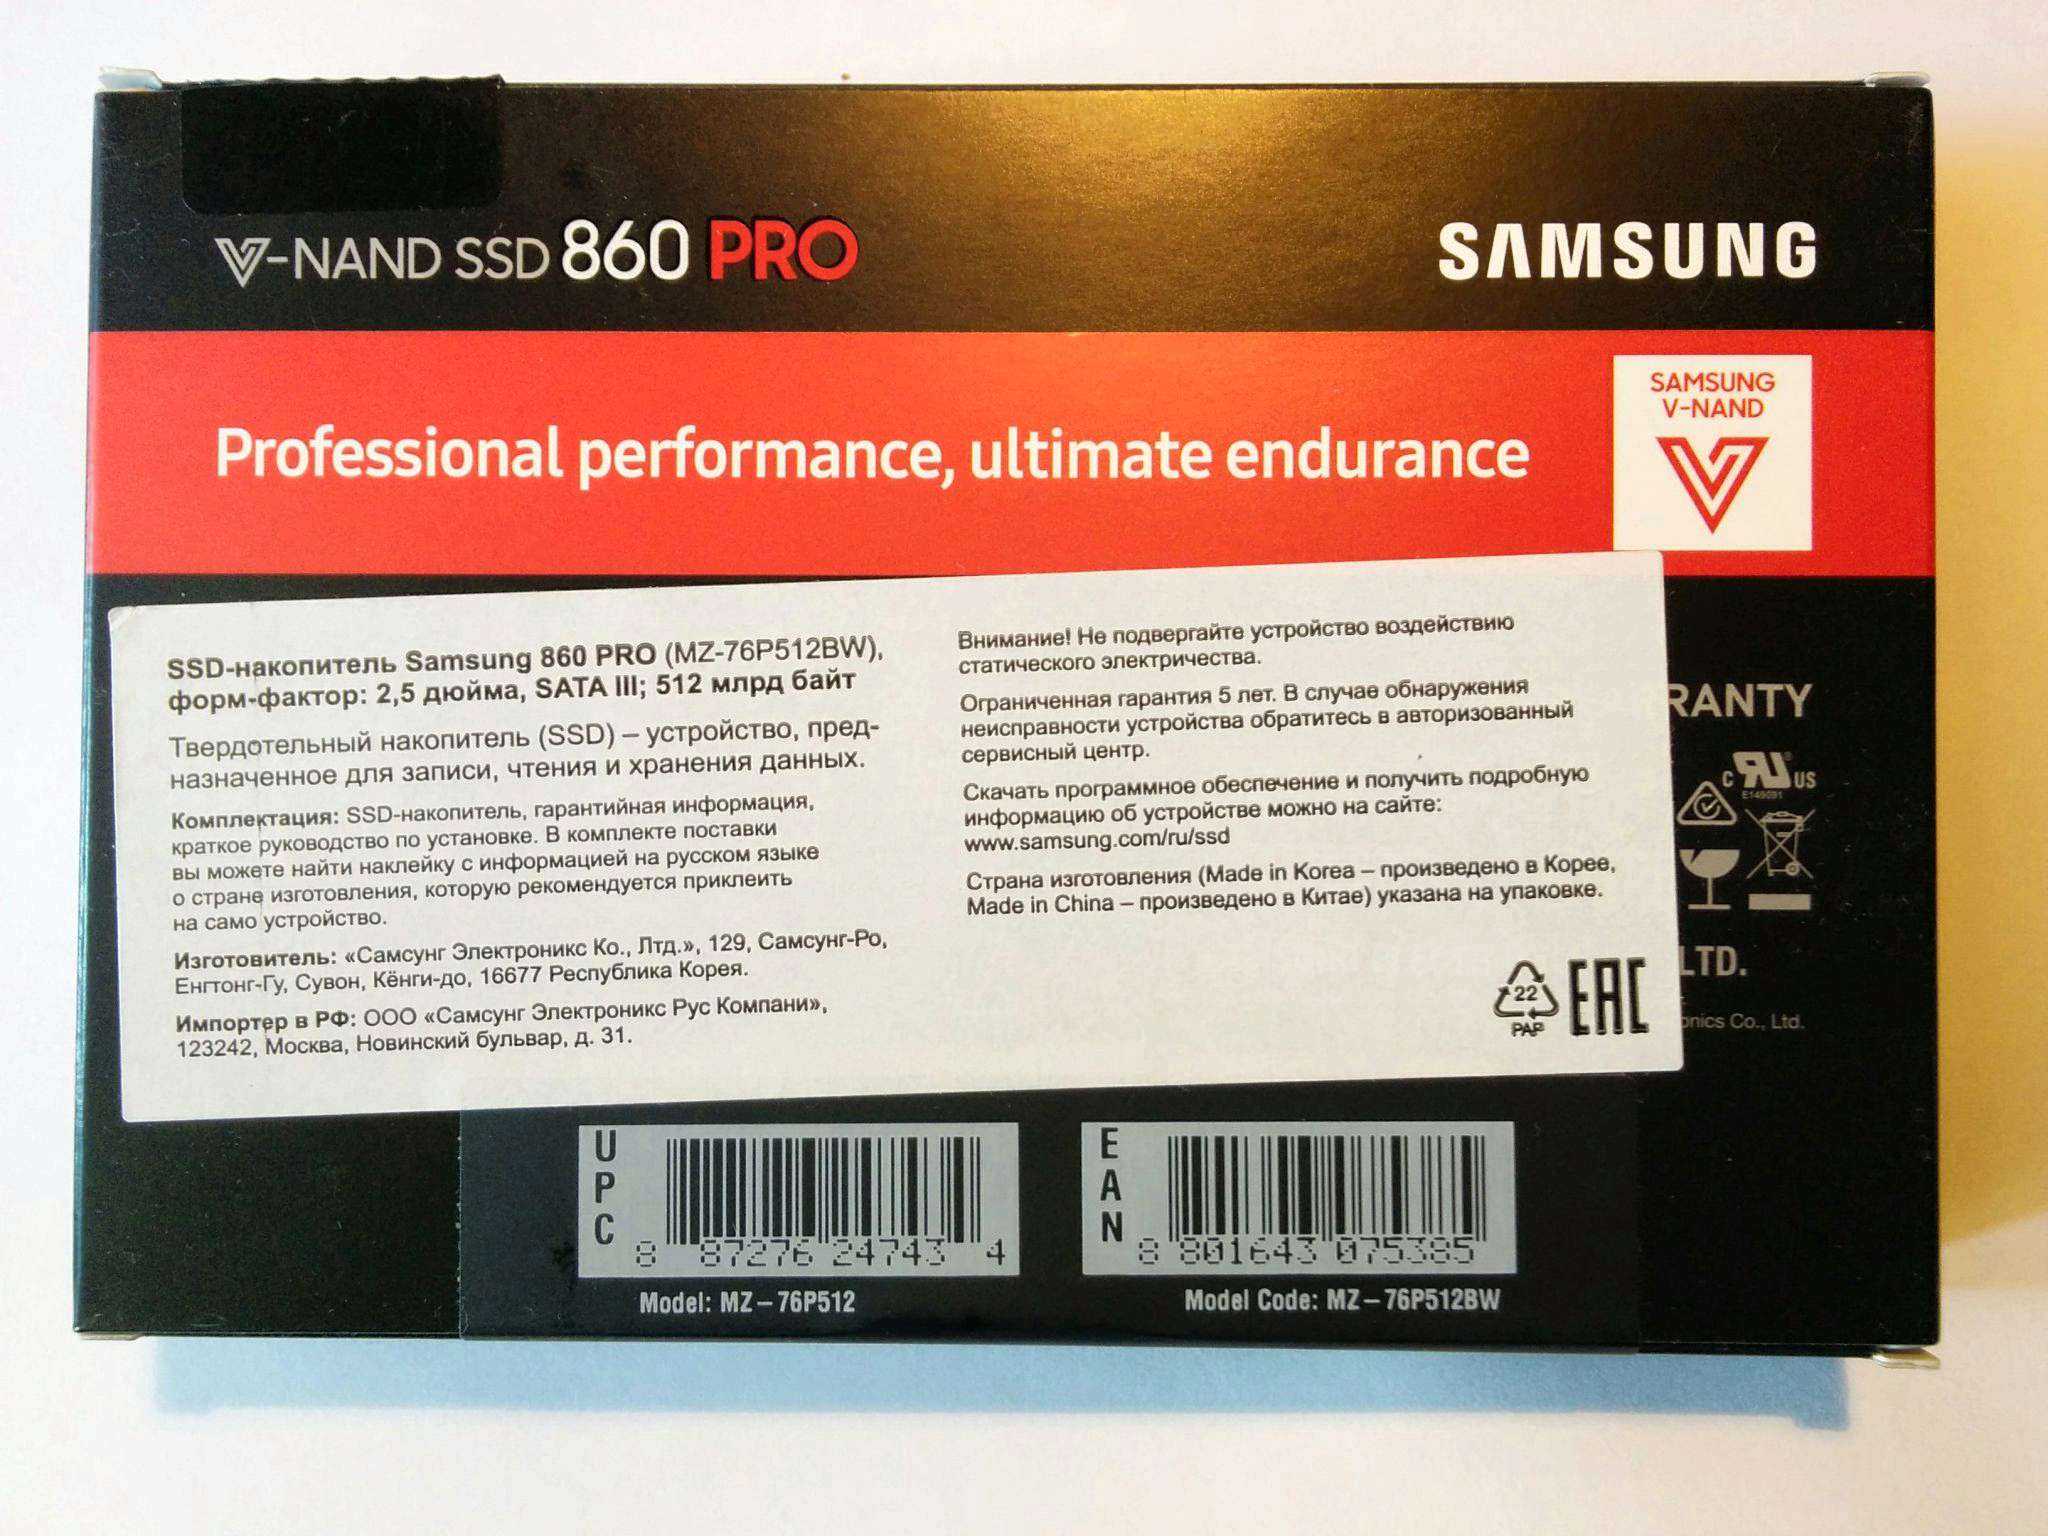 Samsung ssd 870 evo vs samsung ssd 860 pro – сравнение, различия, преимущества